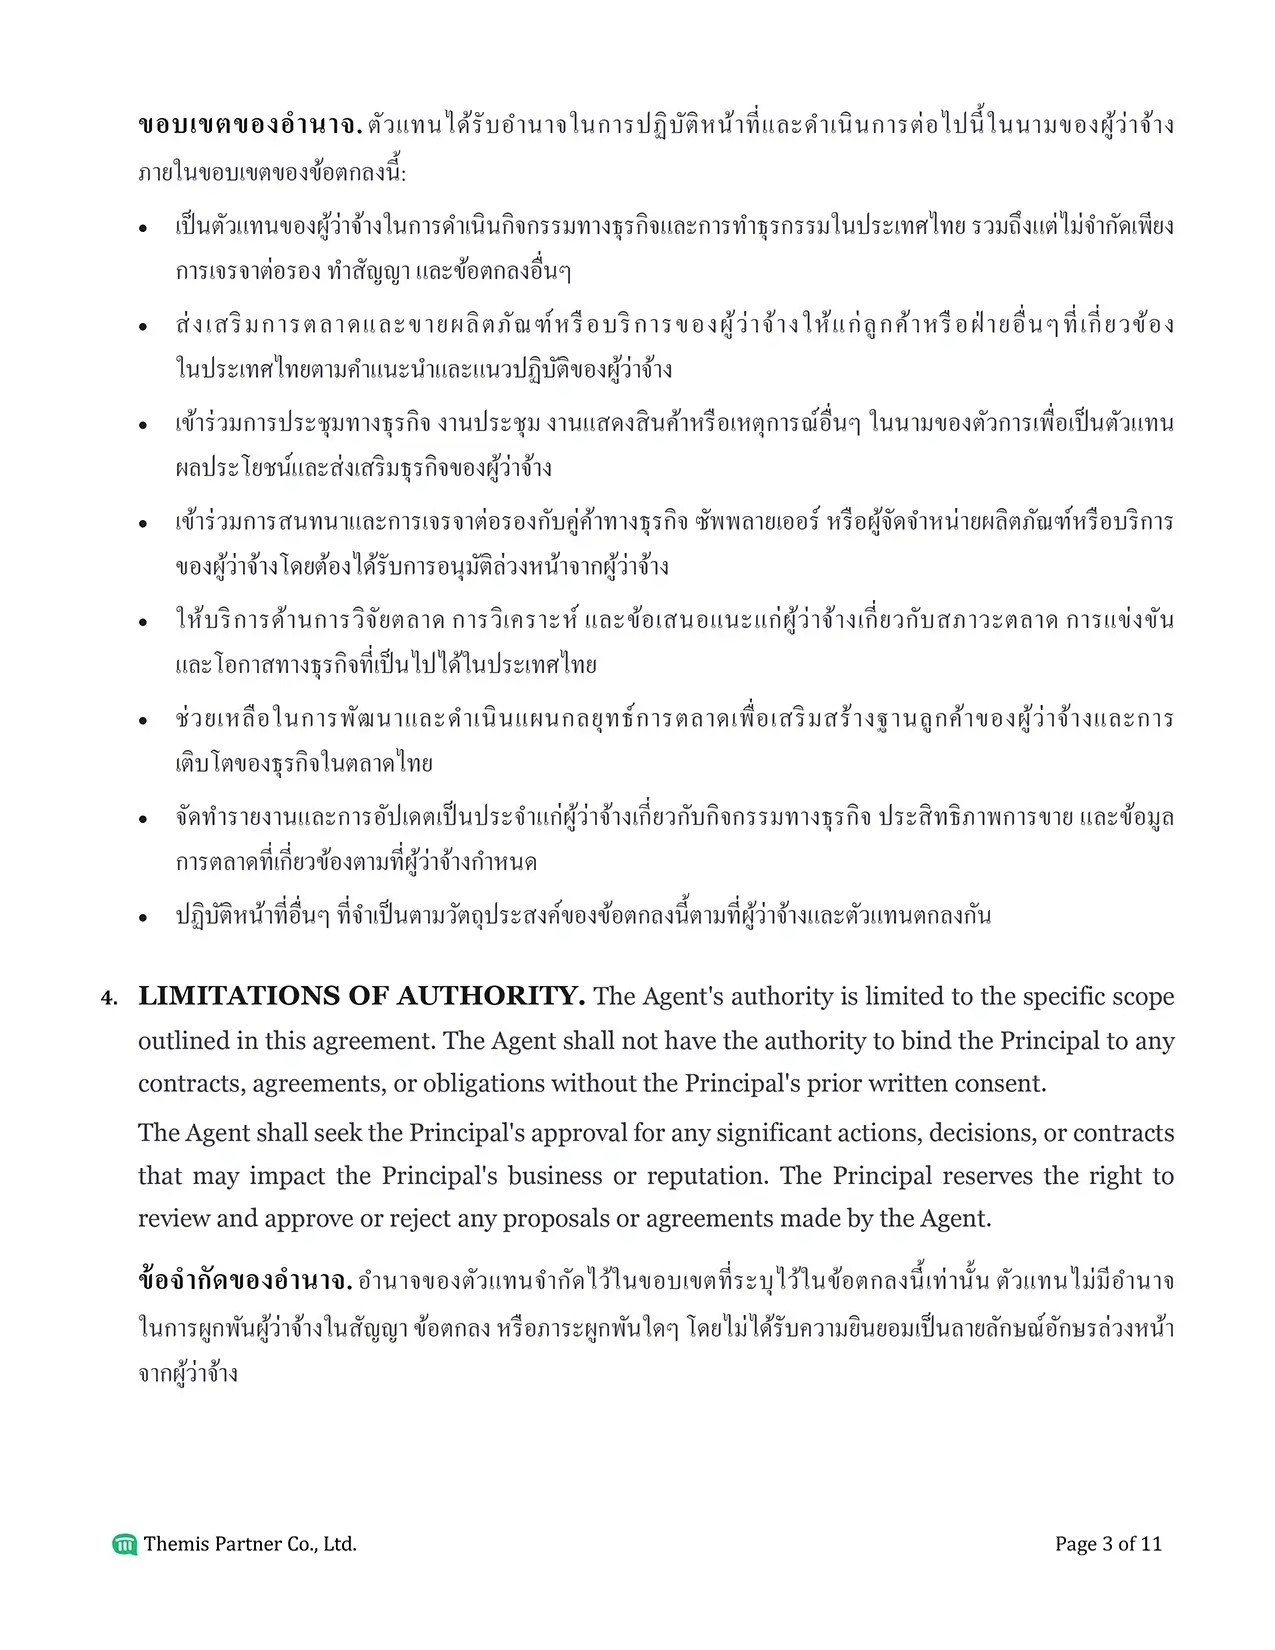 Agency agreement Thailand 3